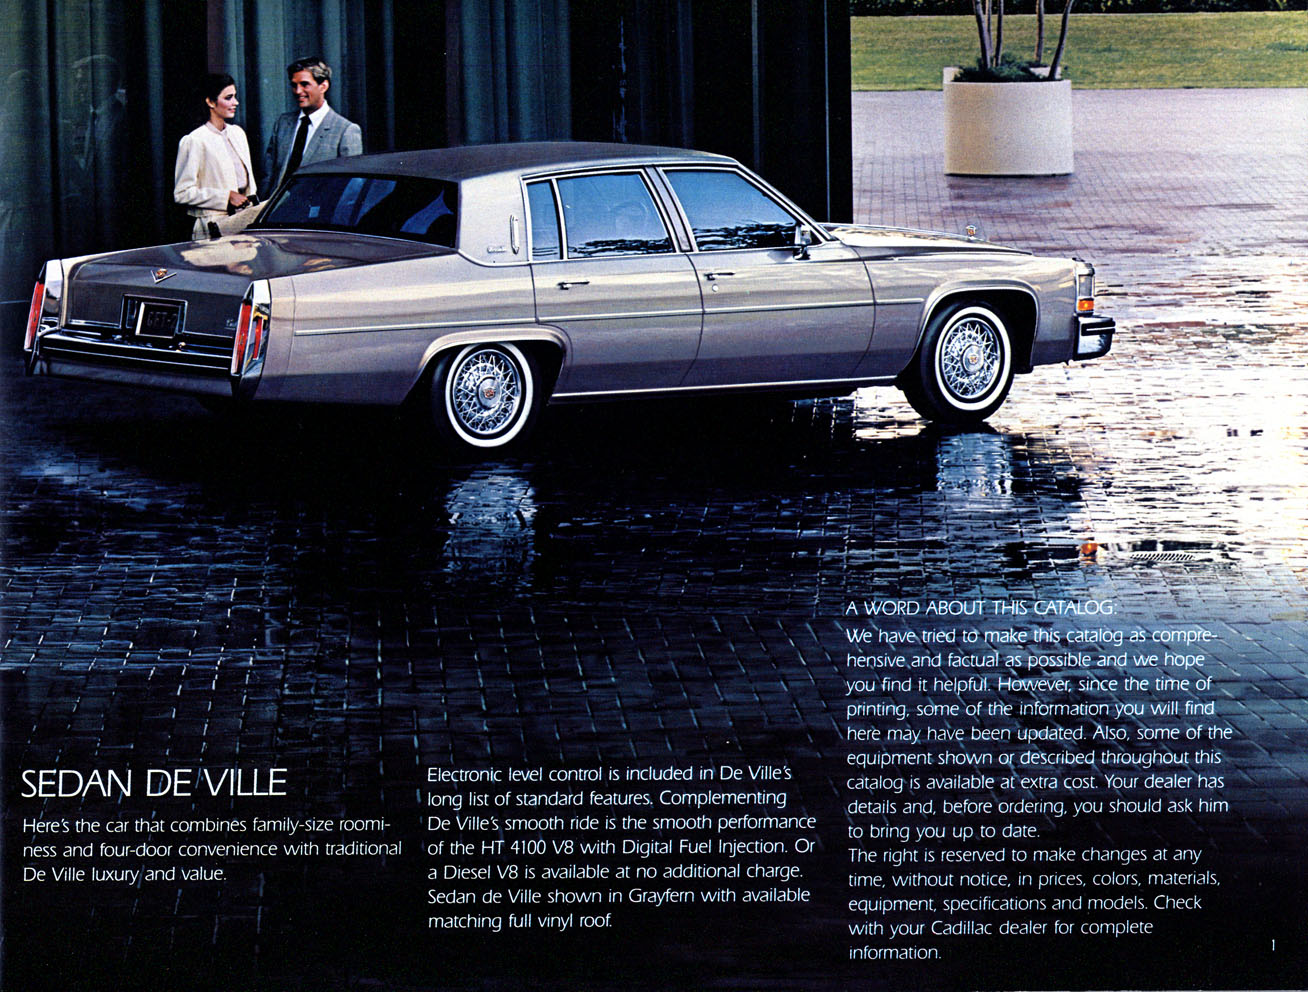 1984 Cadillac-03